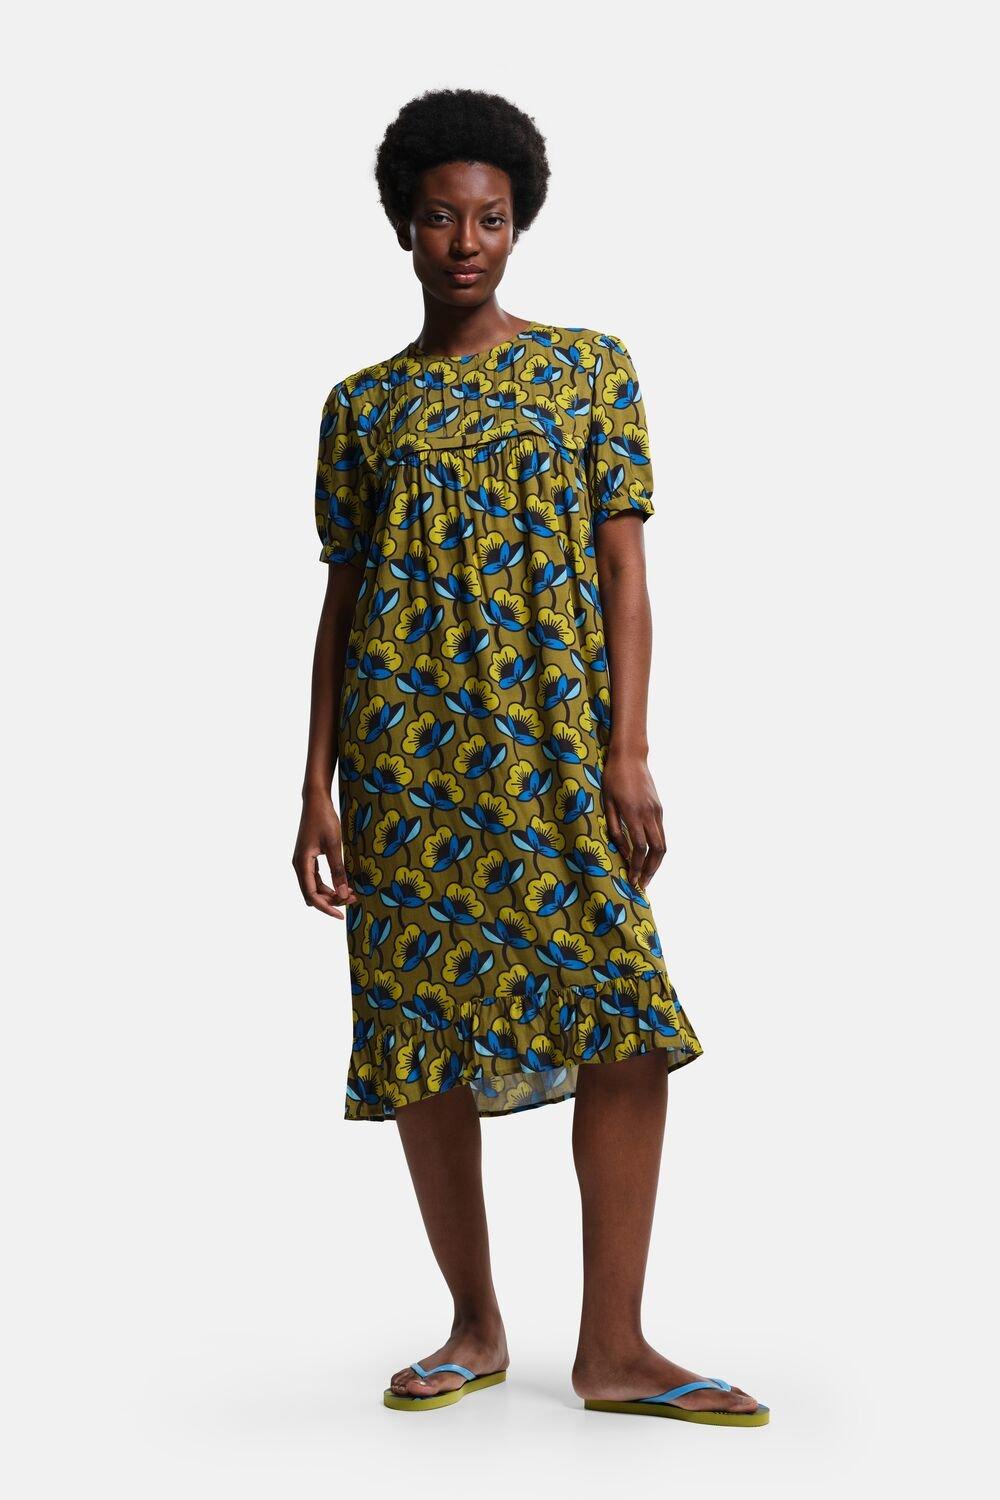 'Orla Kiely' Printed Short Sleeve Dress